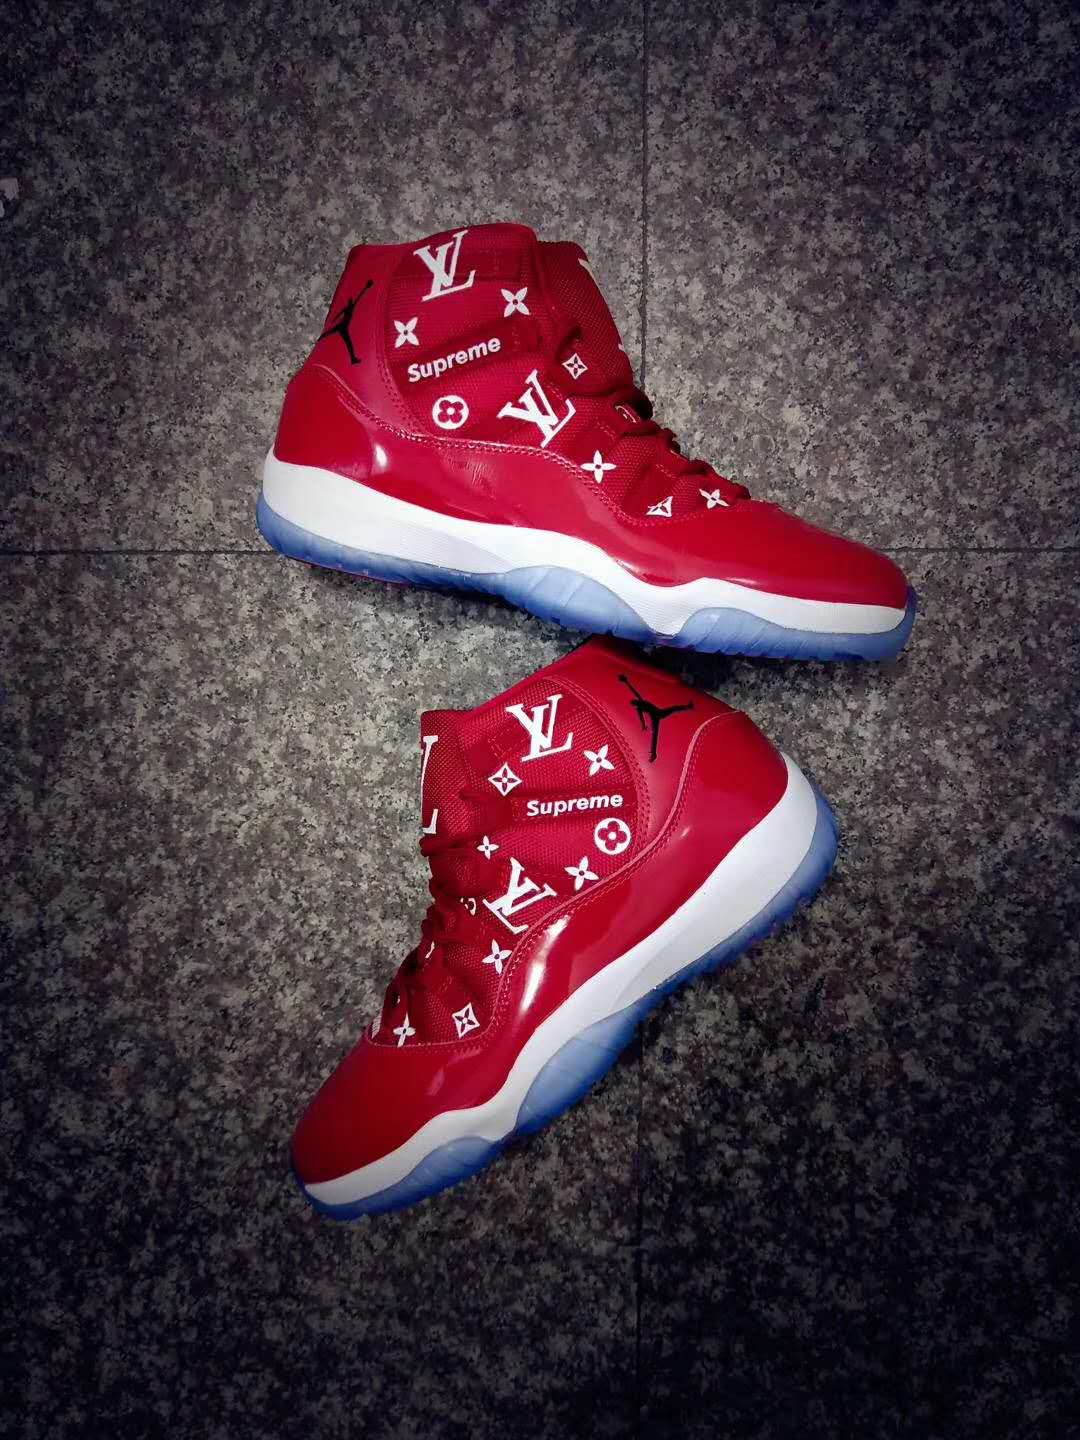 New Air Jordan 11 Retro Red White Shoes